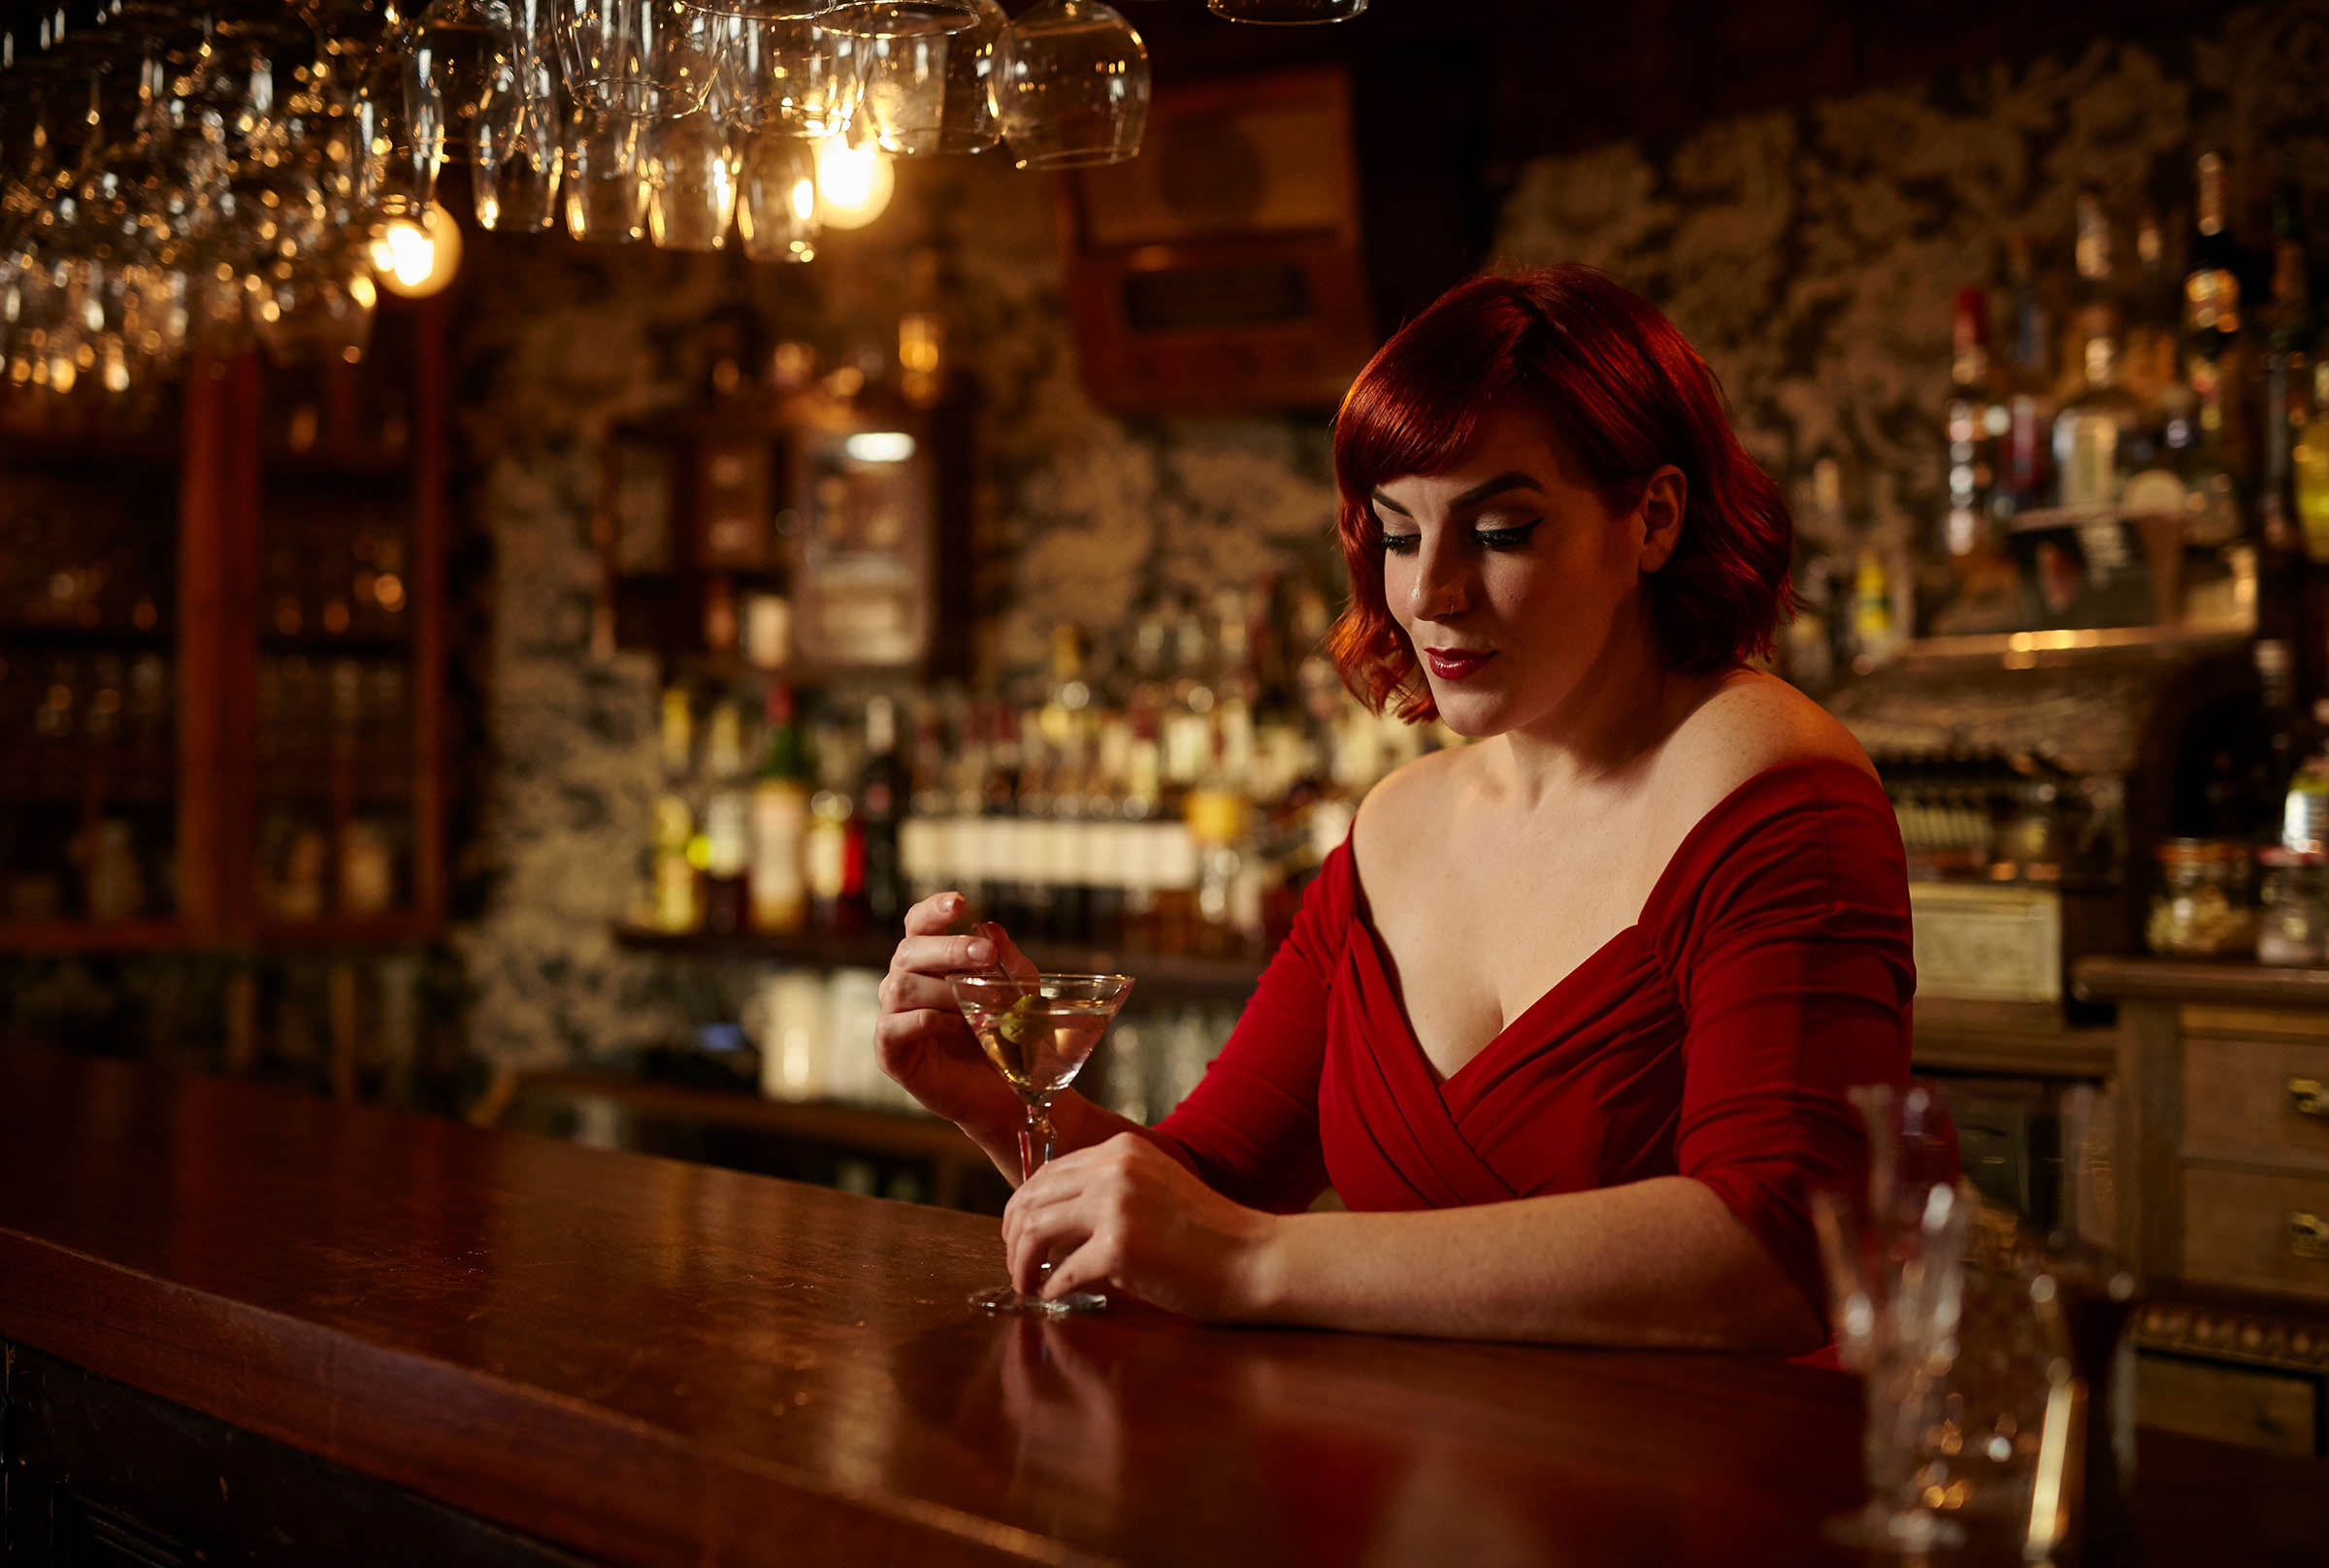 Jazz Singer Ruby Wilder enjoying a cocktail in a bar